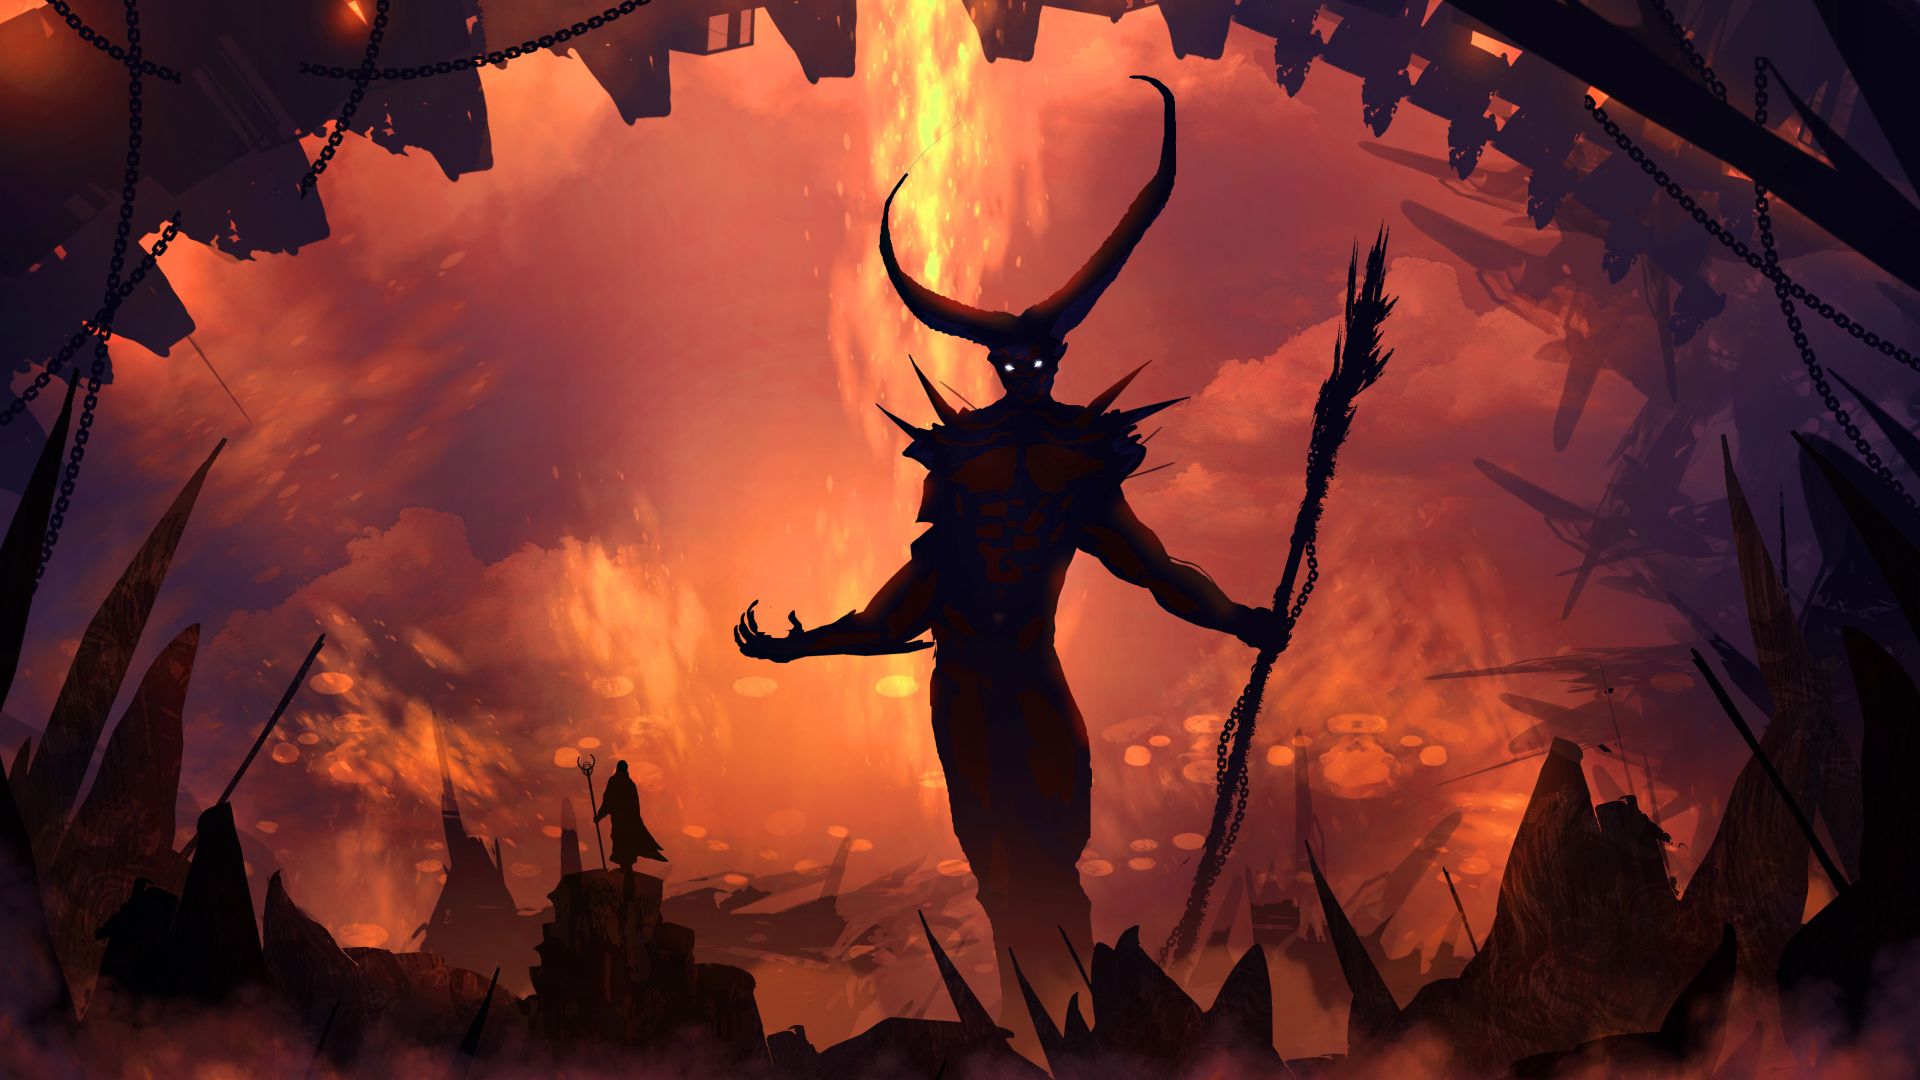 Desktop Wallpaper Demon Devil Monster Fantasy 5k Hell Art Hd Image Picture Background